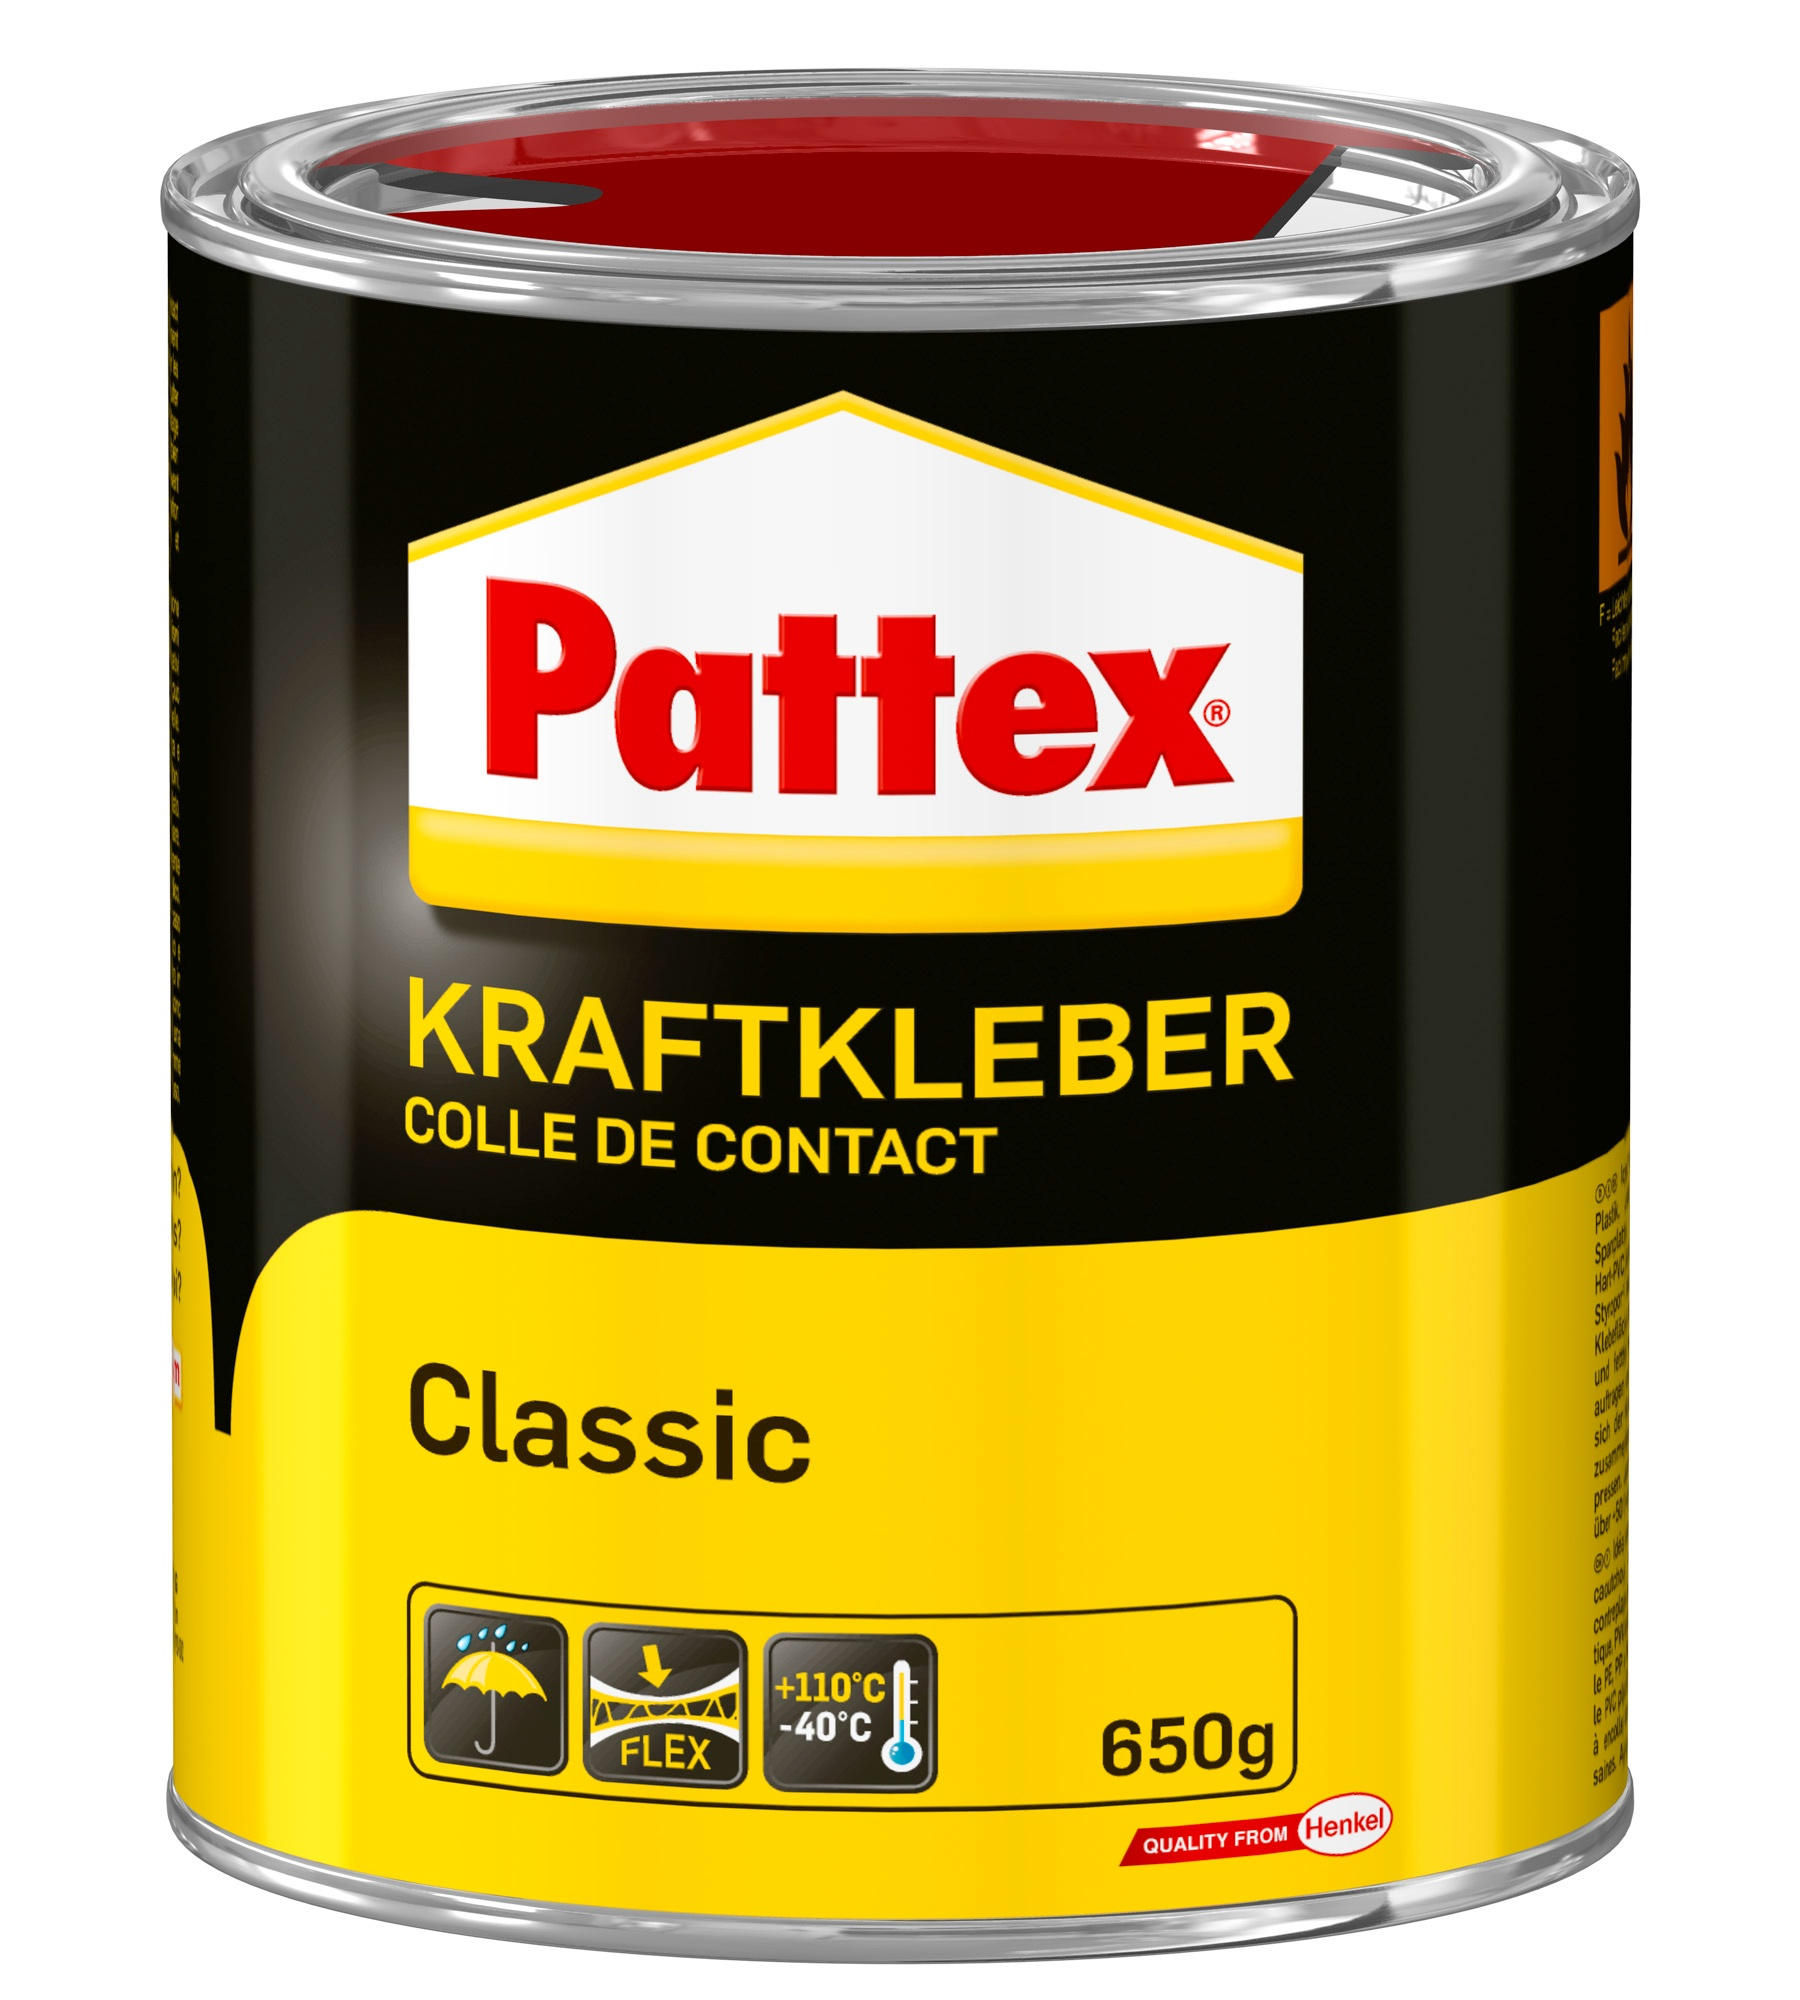 Pattex Kraftkleber Classic hochwärmefest, 650 g